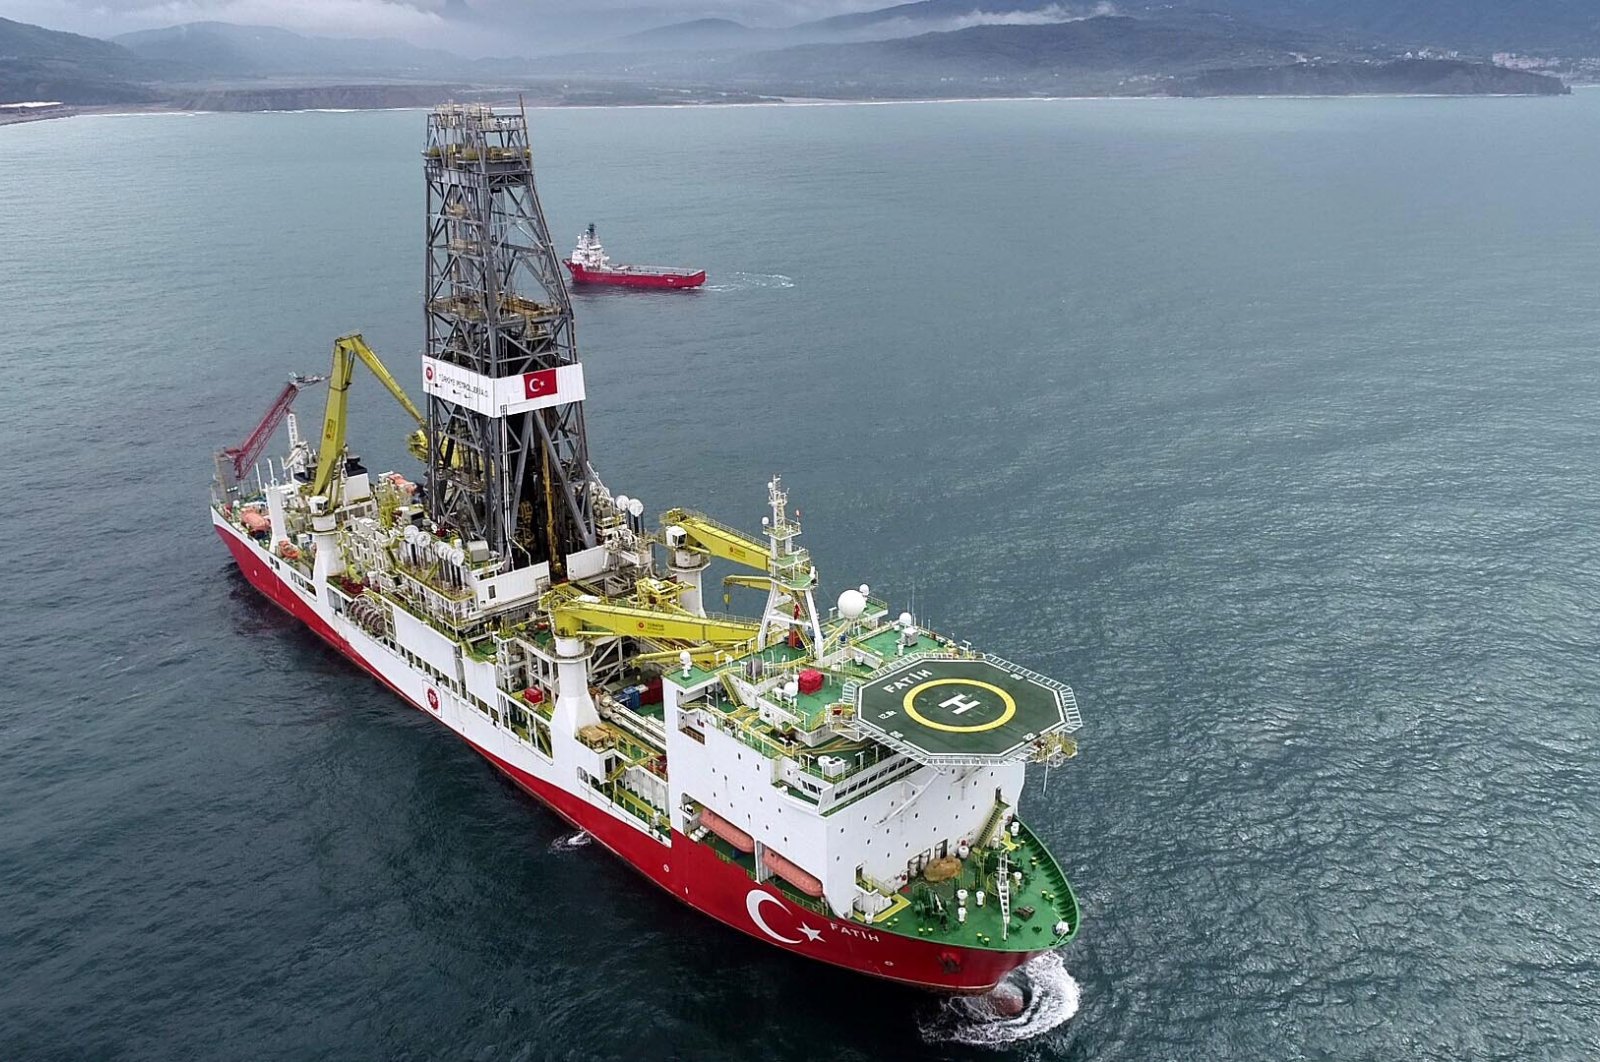 Turkey’s drillship Fatih to start drilling at new location next month